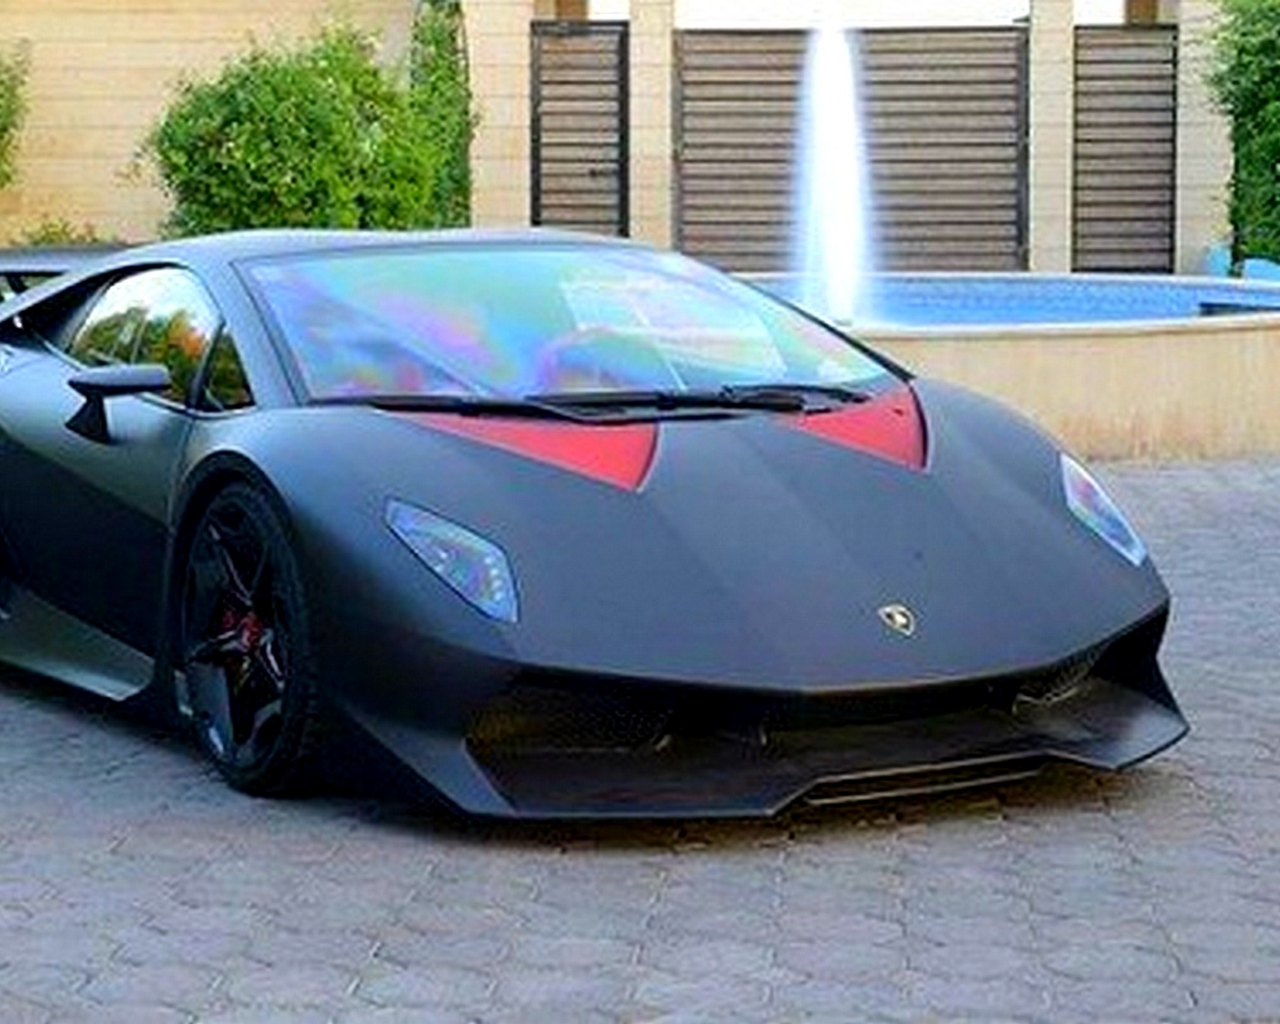 спорткар, тюнинг, Lamborghini Sesto Elemento